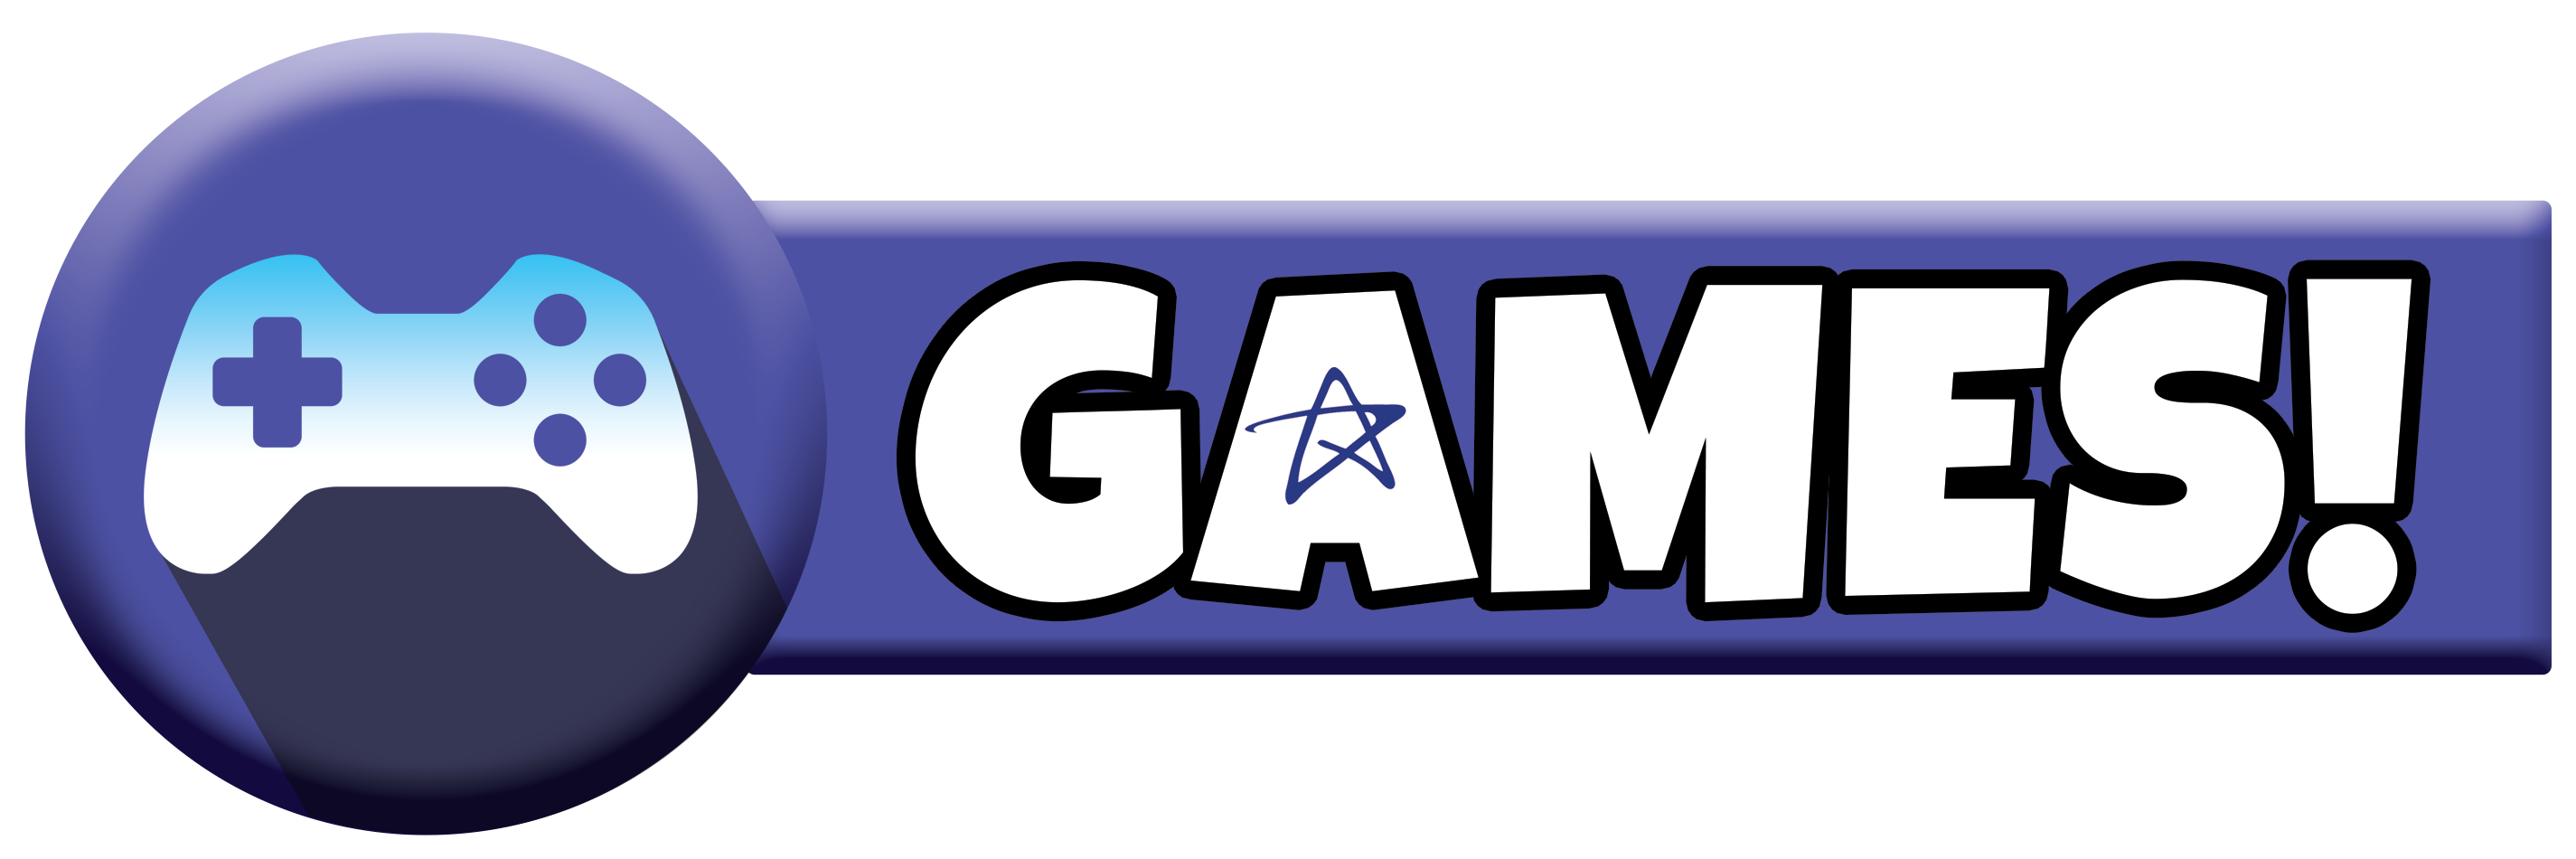 Star_Games